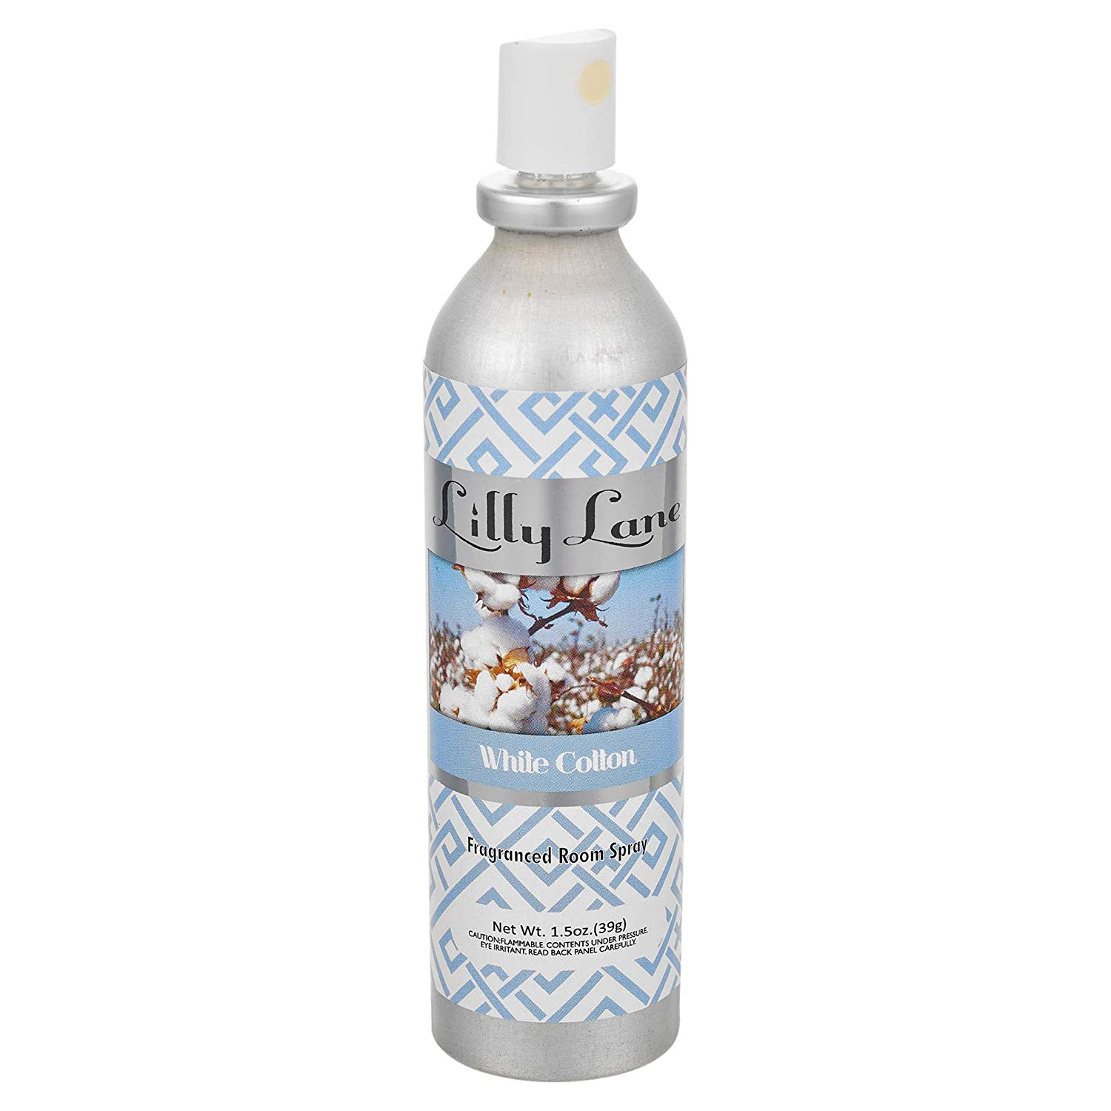 Lilly Lane White Cotton Room Spray